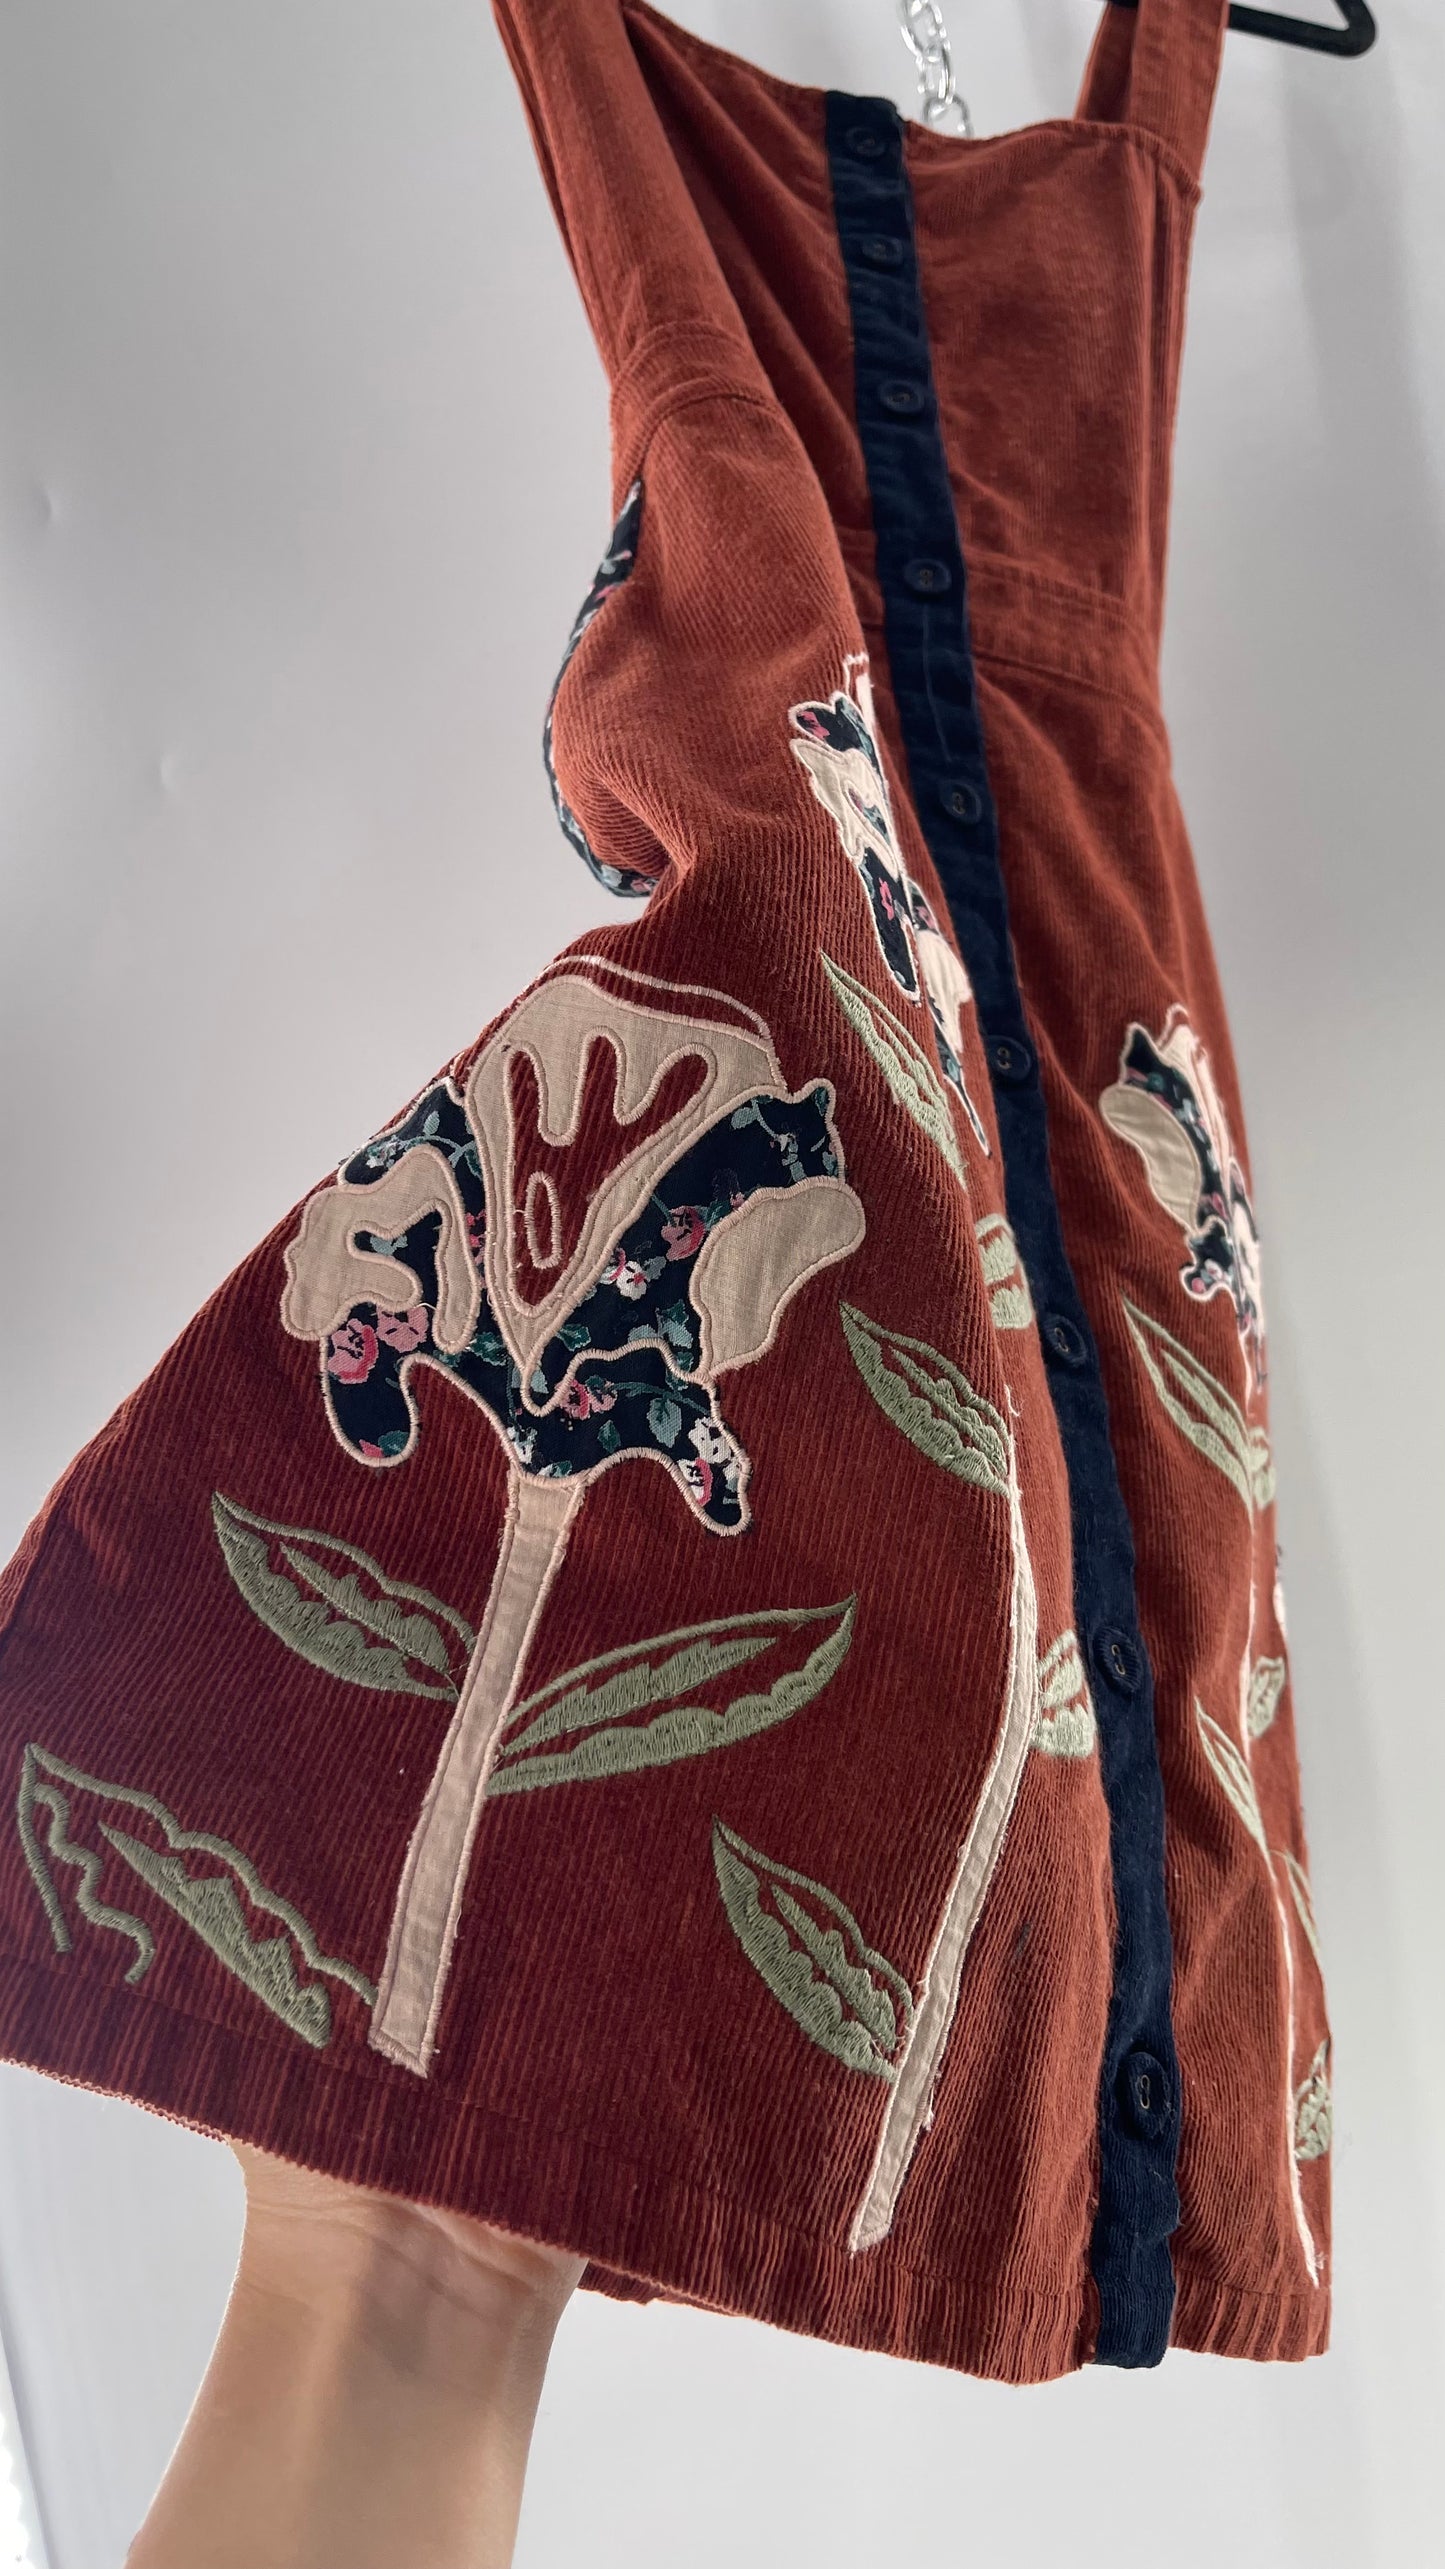 Seen. Worn. Kept. Anthropologie Terracotta Burnt Orange Corduroy Overall Dress with Embroidered Flower Details  (S)